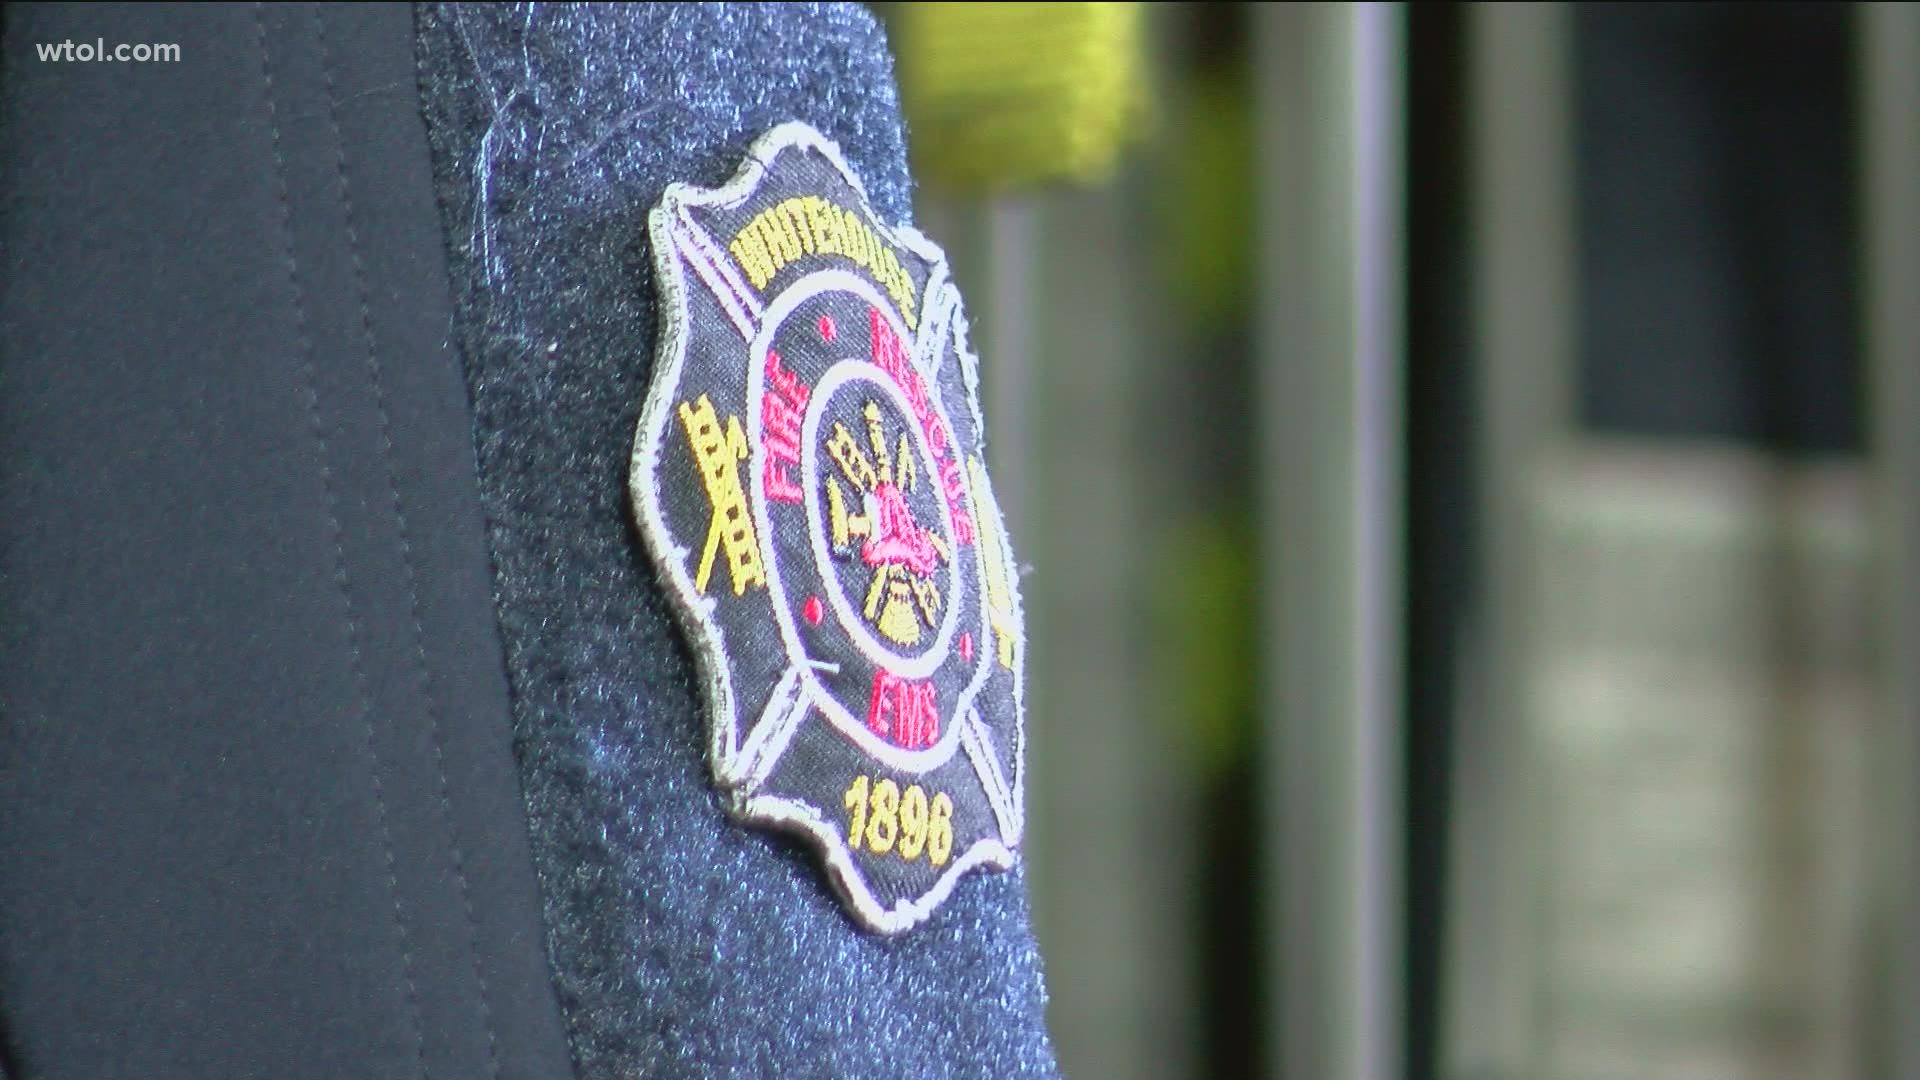 Volunteer firefighter shortage in Ohio